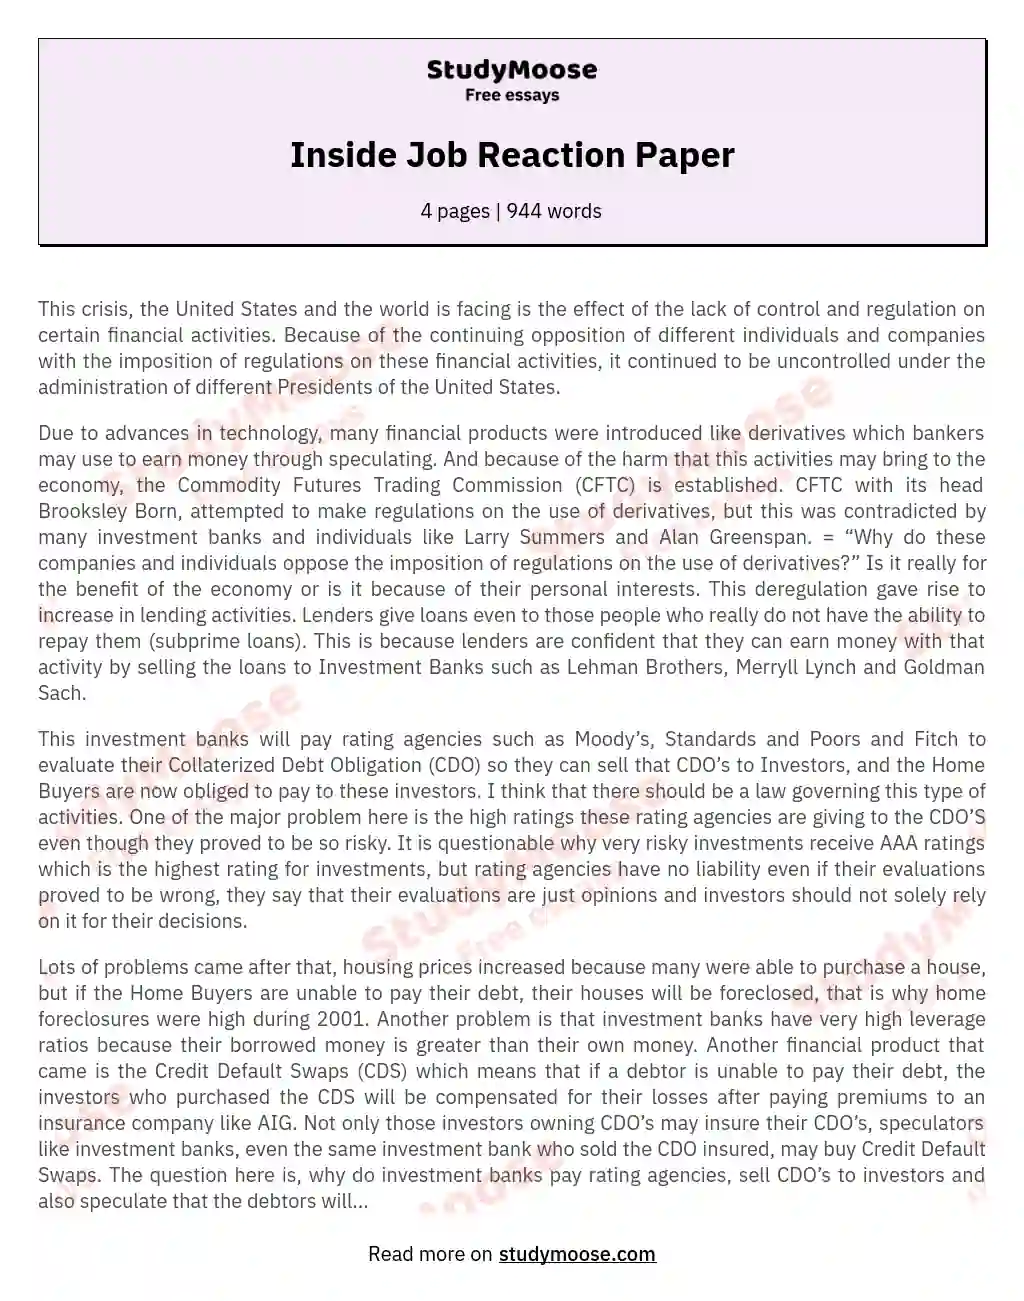 essay about inside job